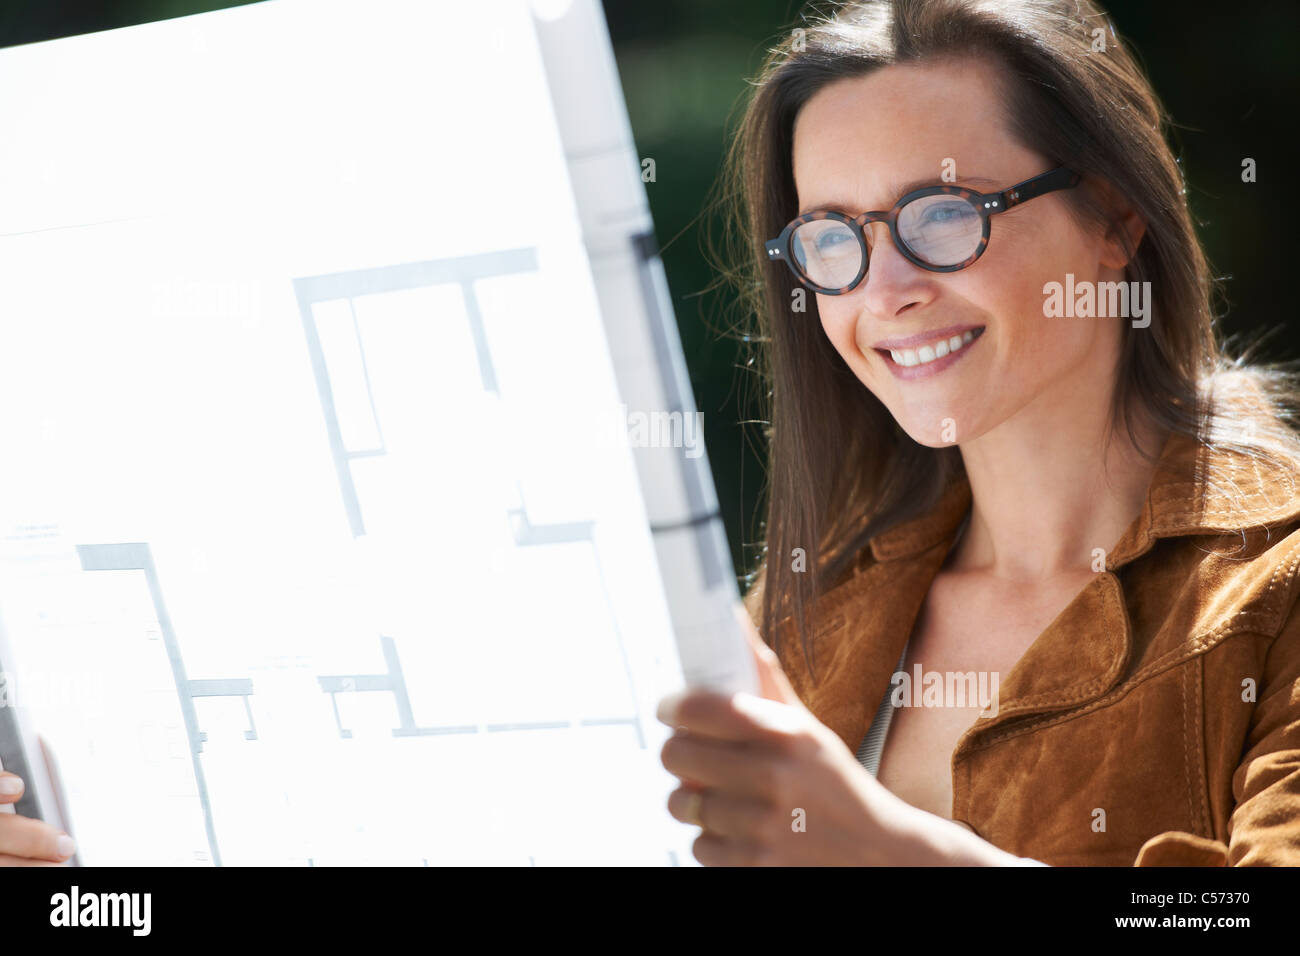 Woman Reading blueprints outdoors Banque D'Images